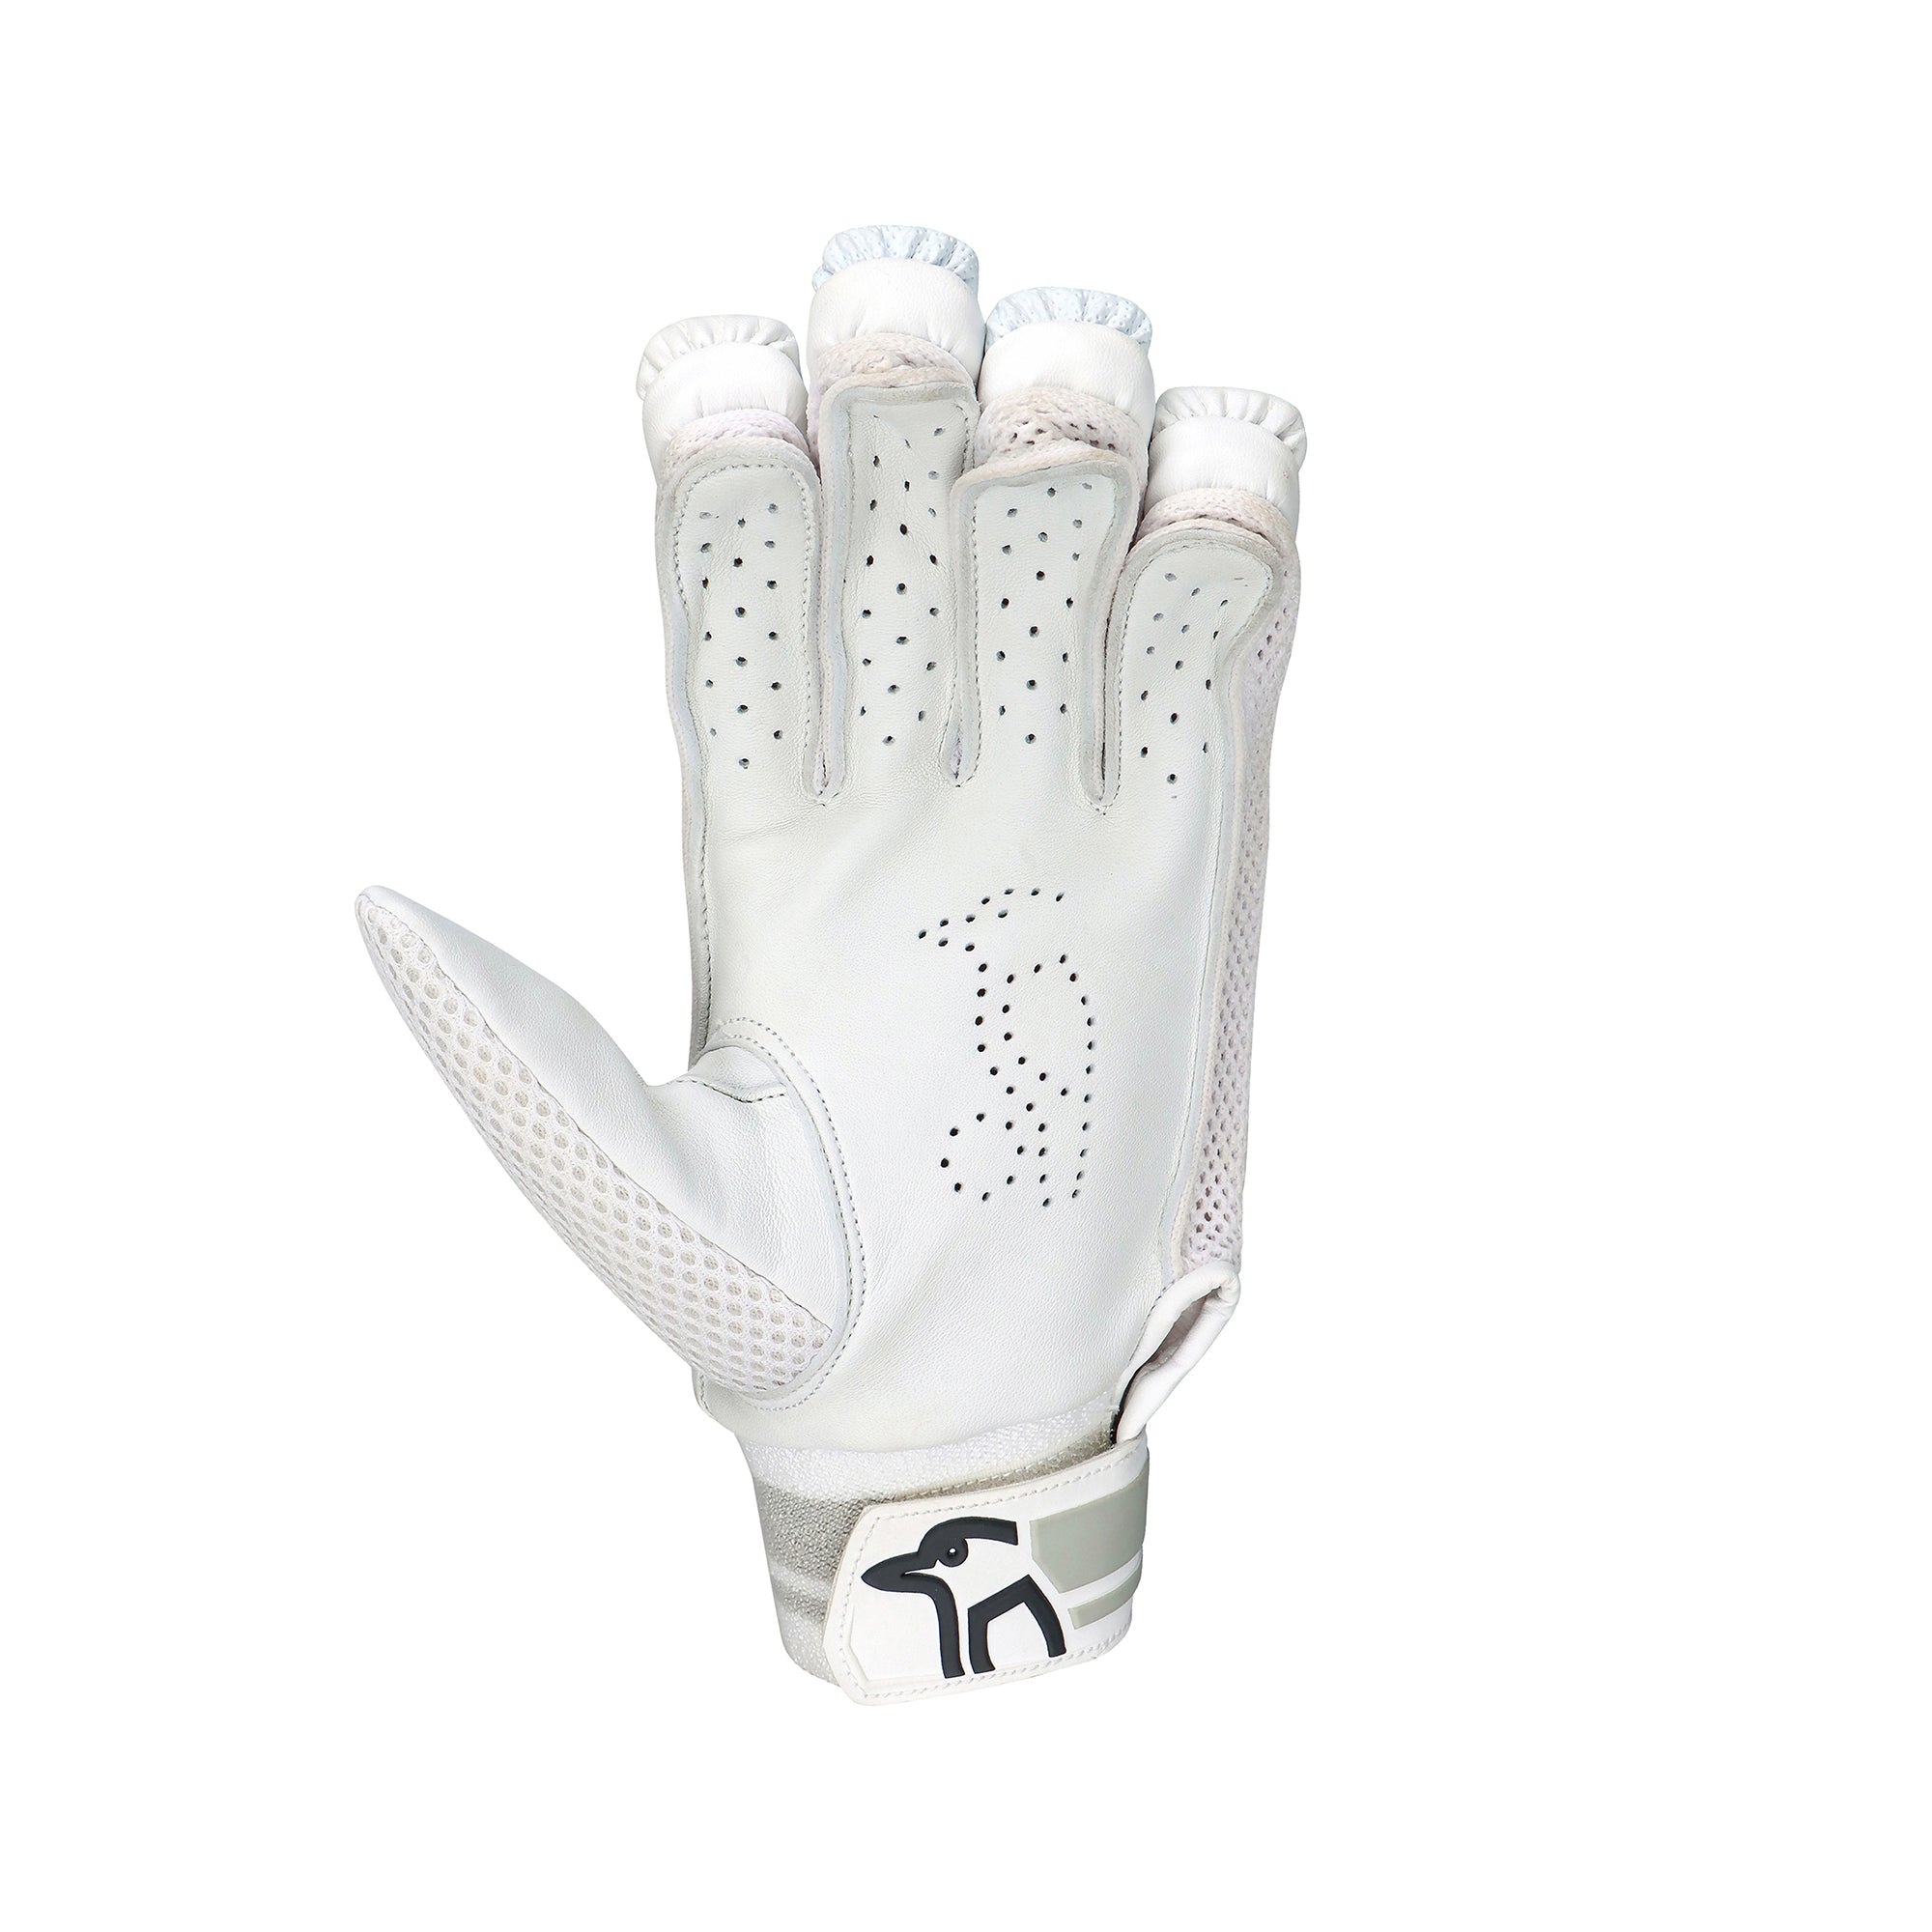 Kookaburra Ghost Pro 4.0 Batting Gloves